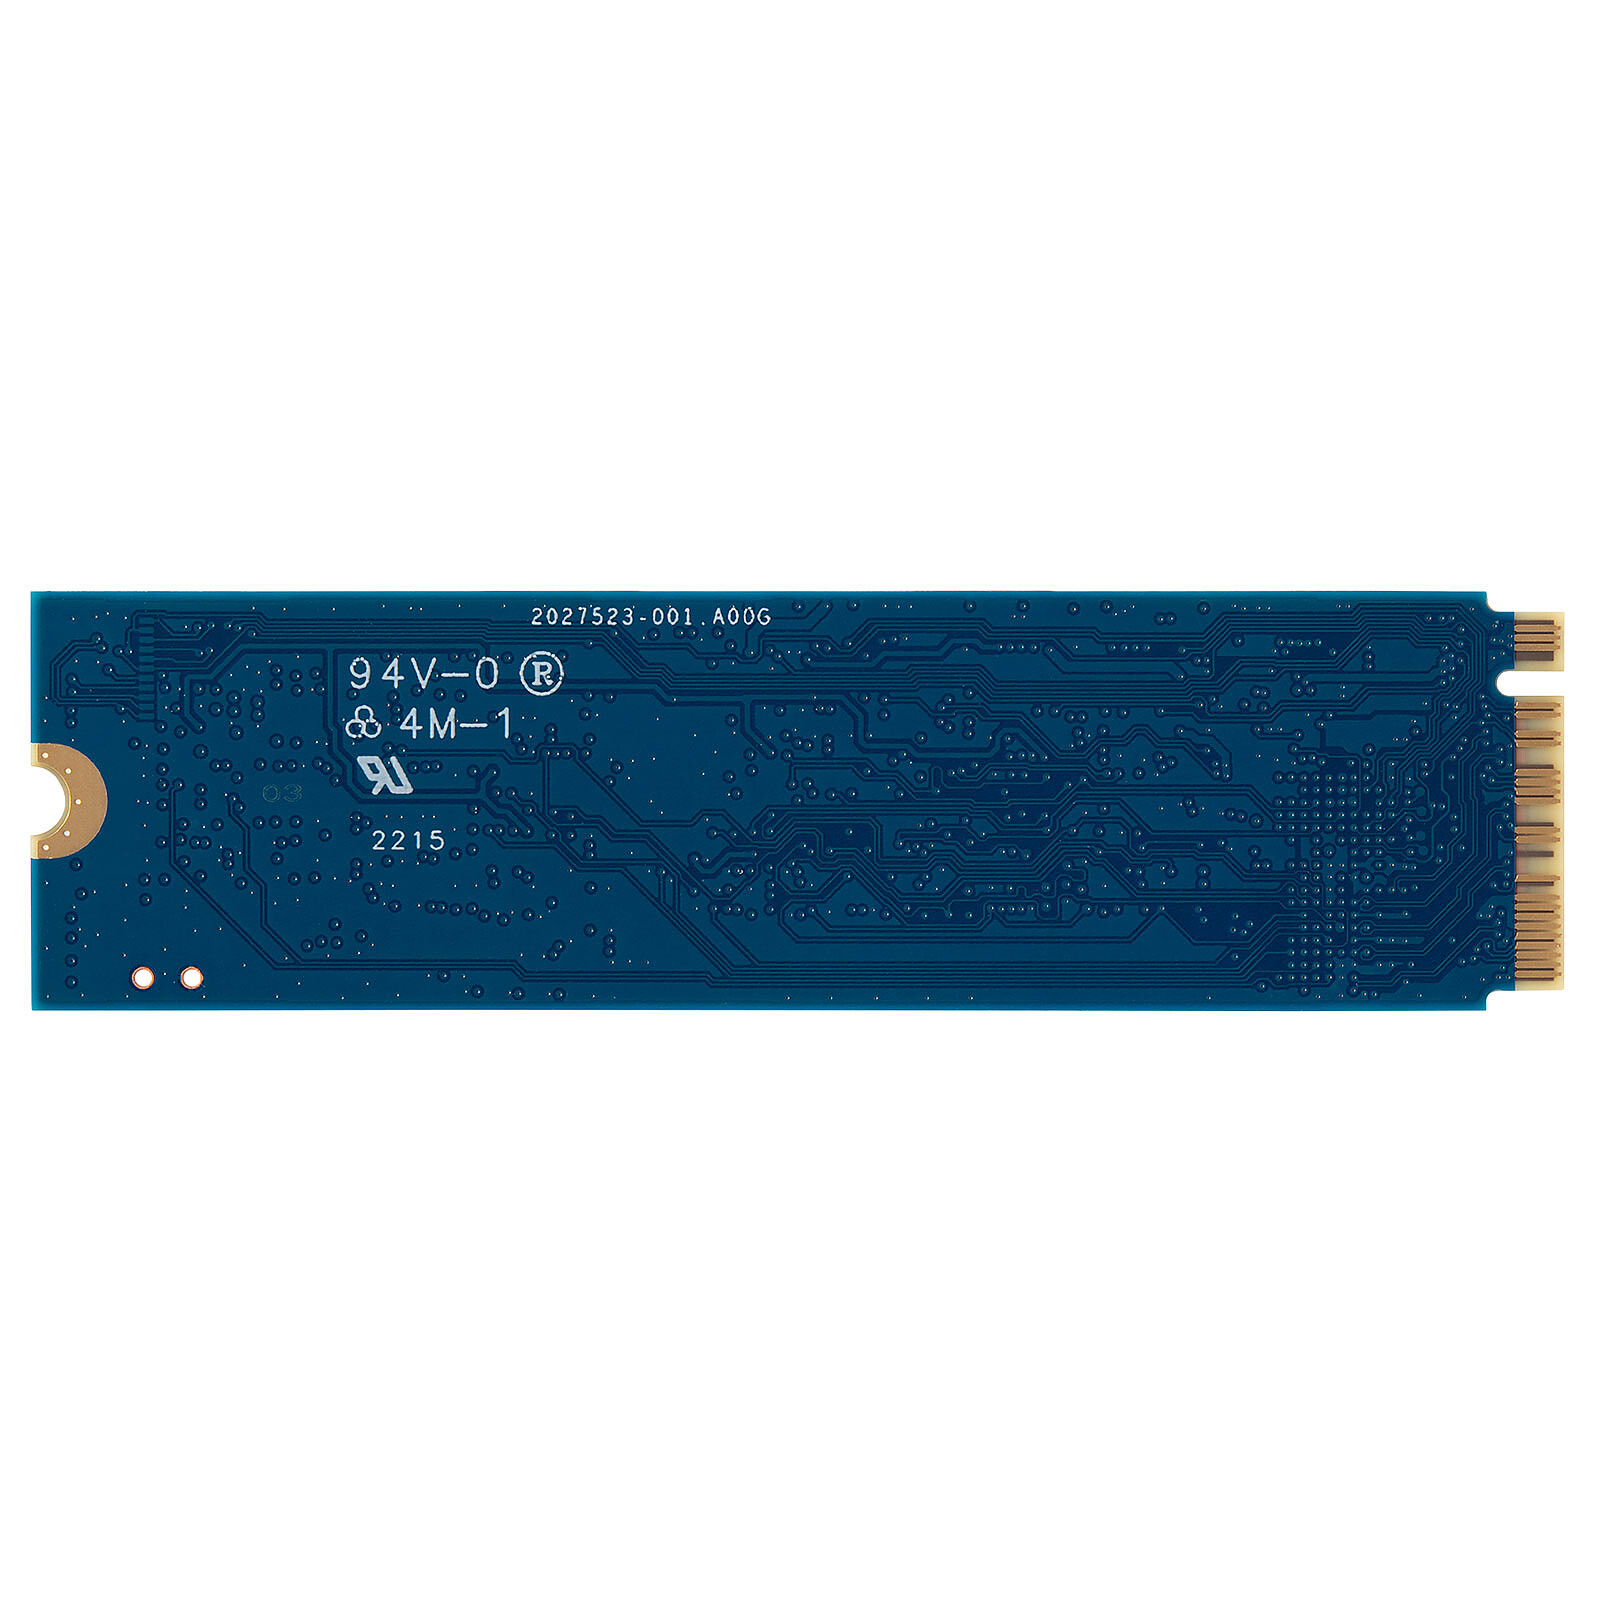 Kingston SSD NV2 2TB - SSD - LDLC 3-year warranty